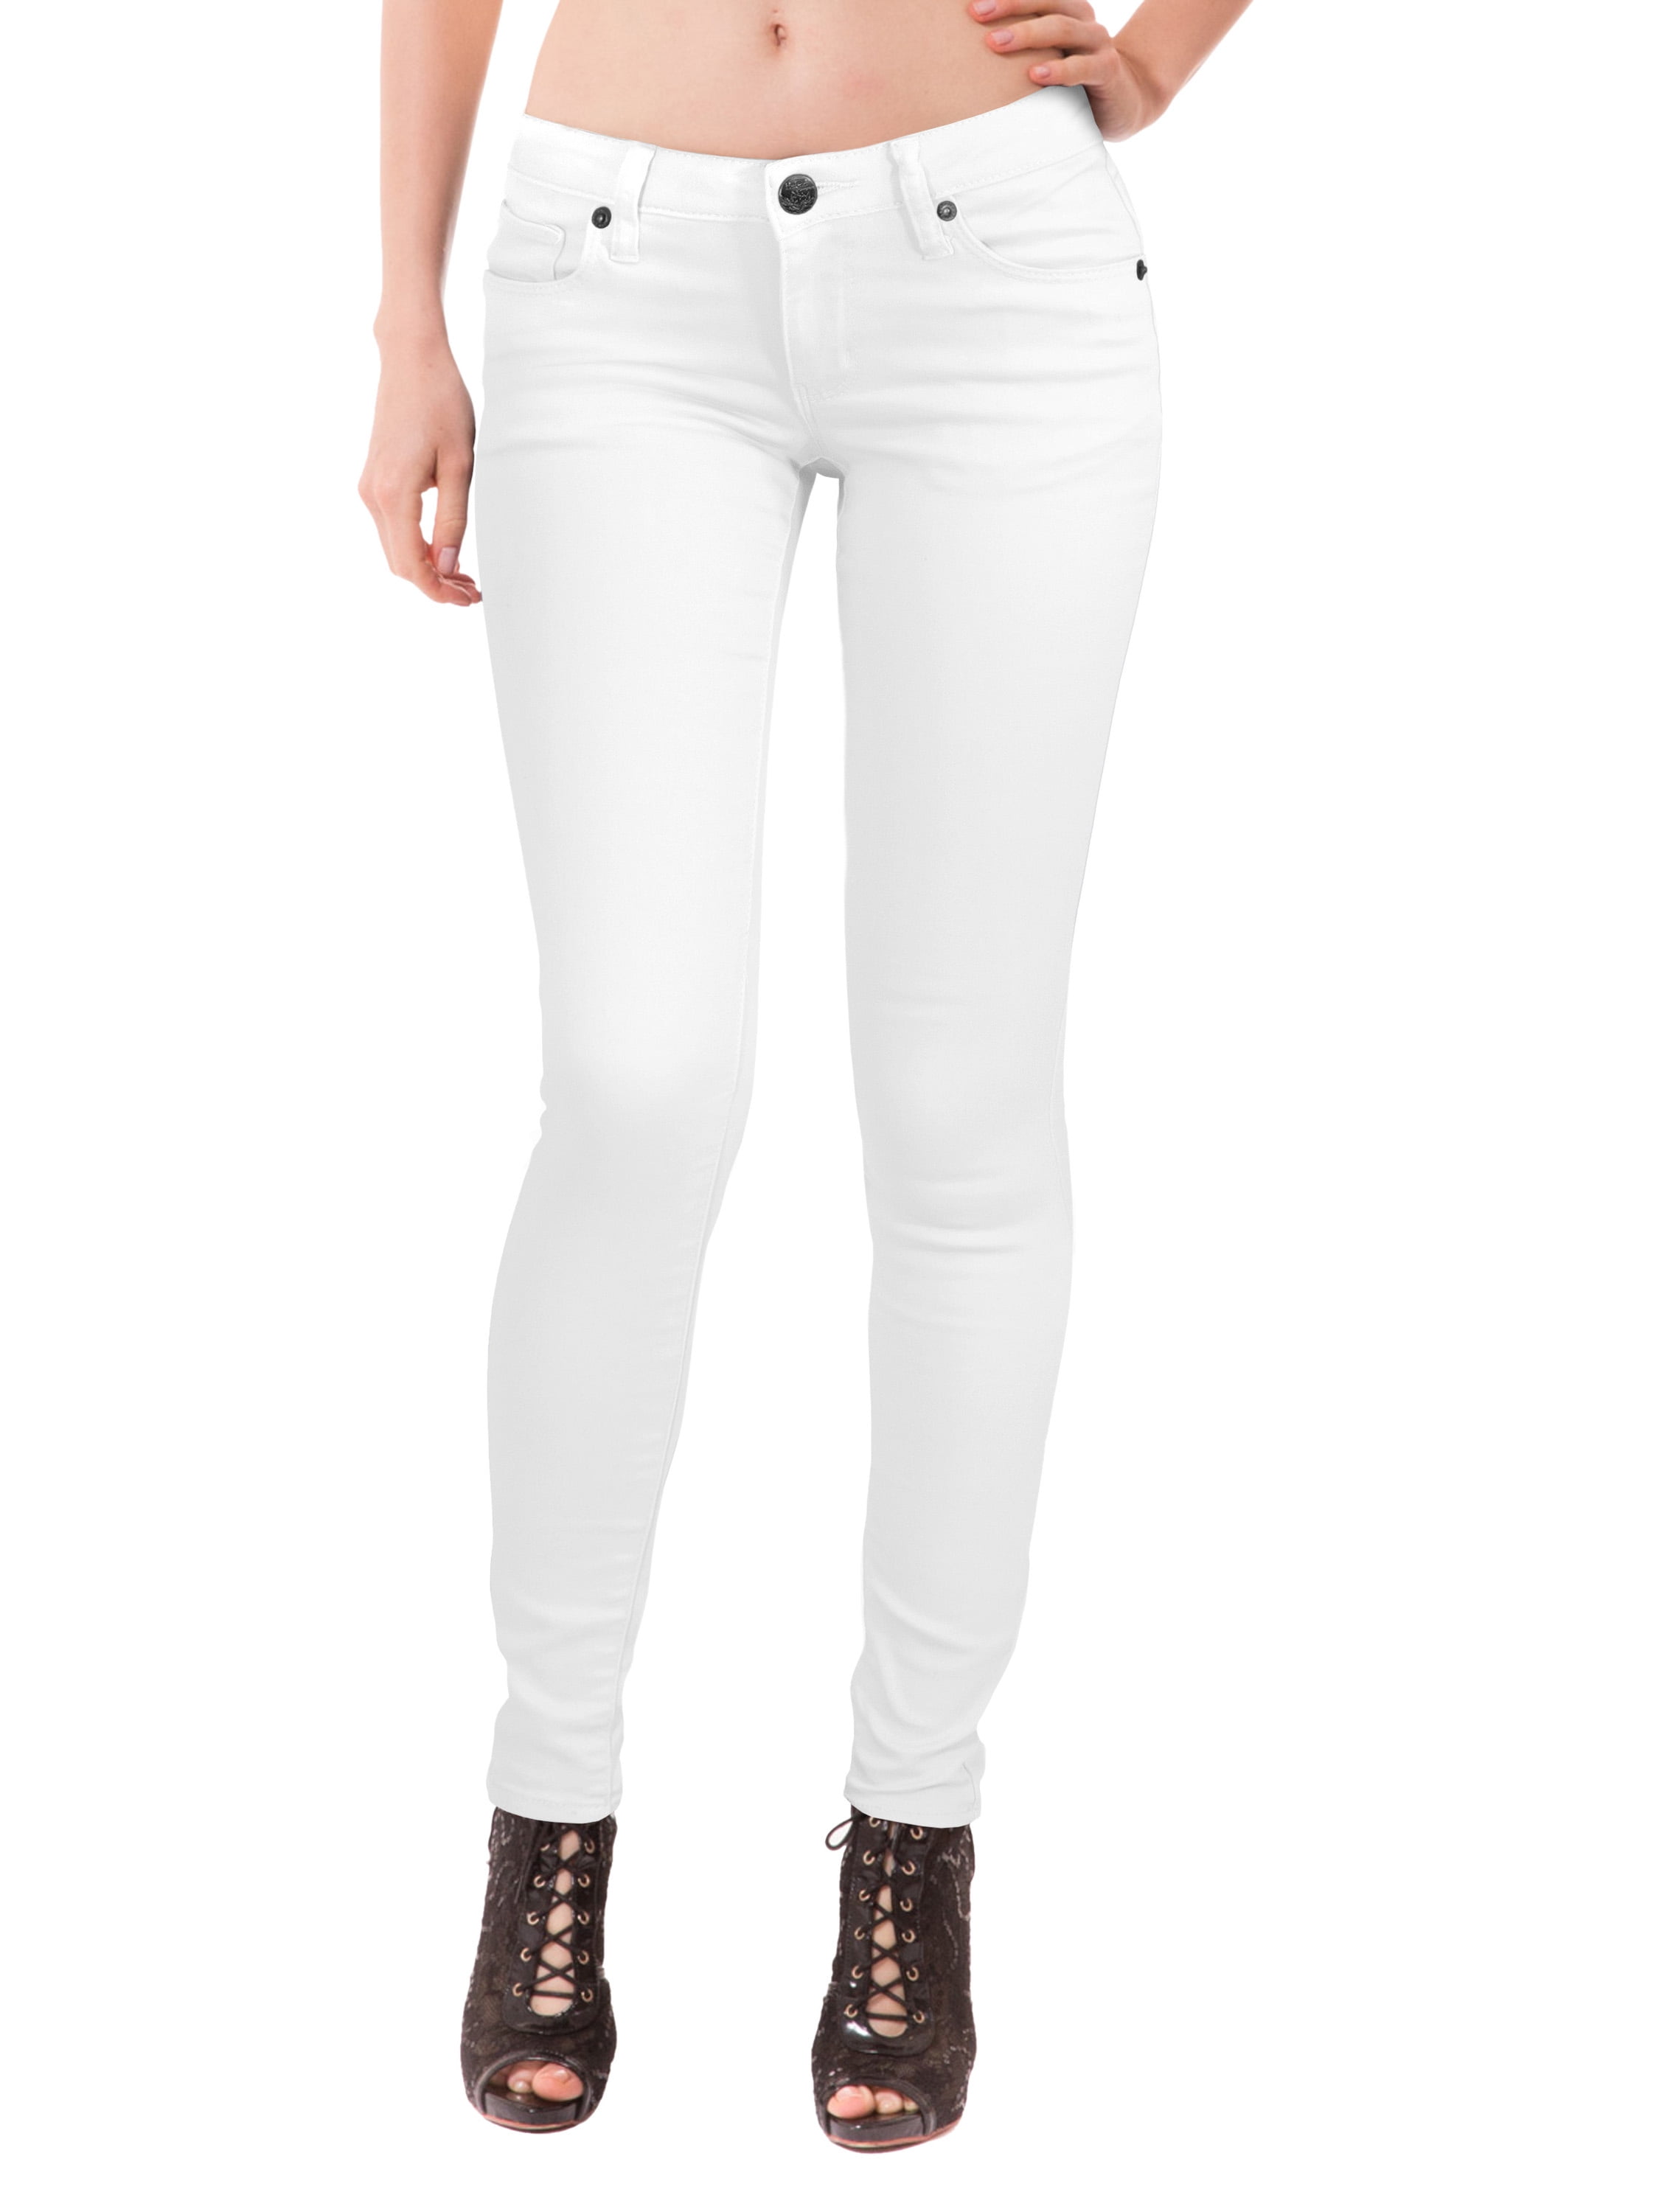 women's white stretch denim jeans